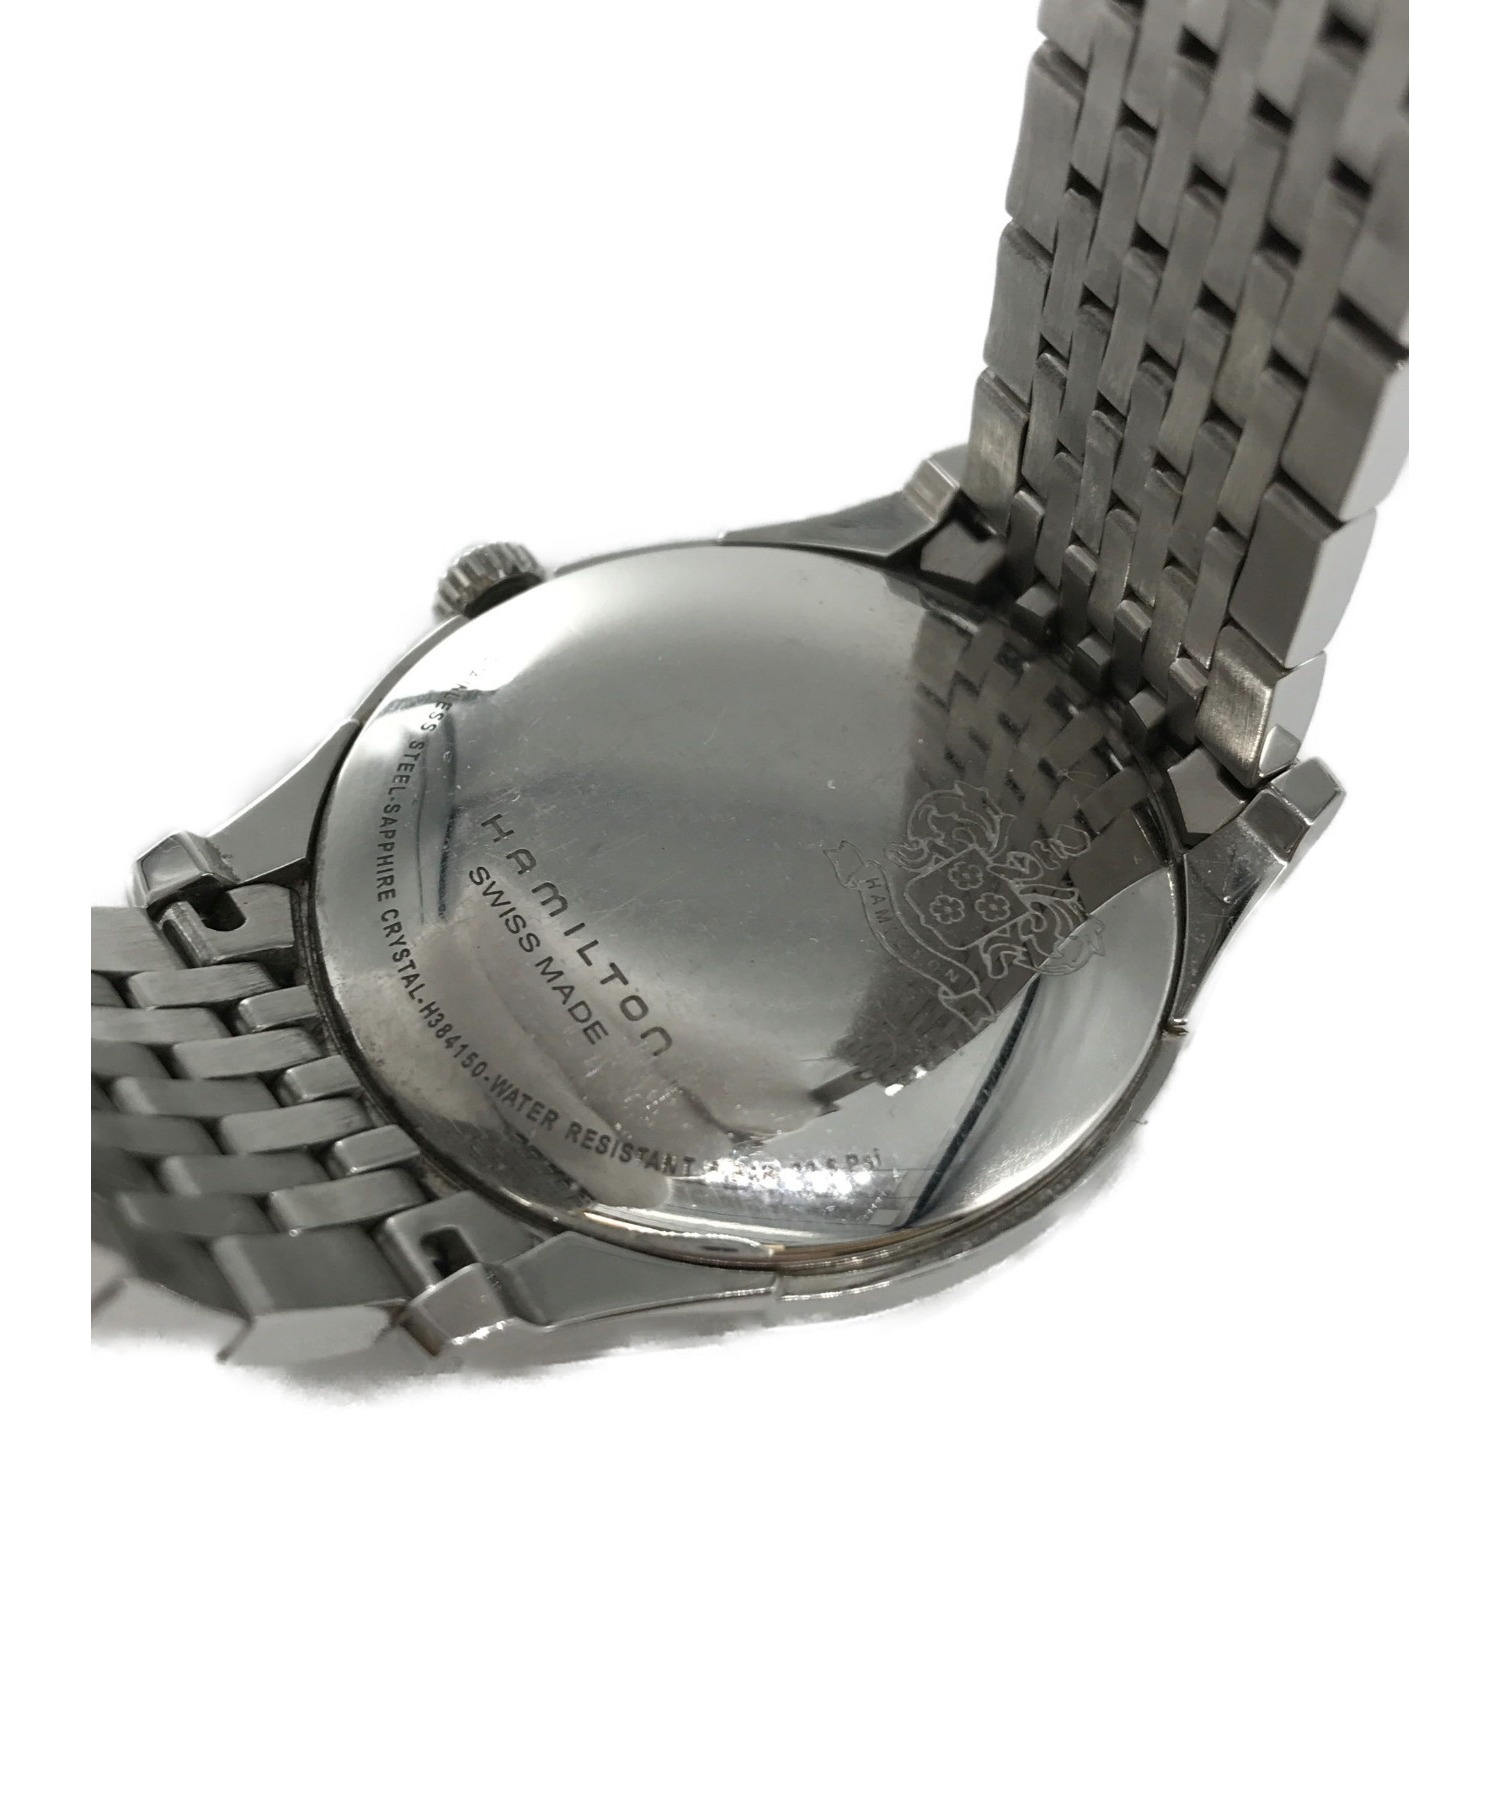 HAMILTON (ハミルトン) 腕時計 シノマティック H384150 自動巻き 動作確認済み